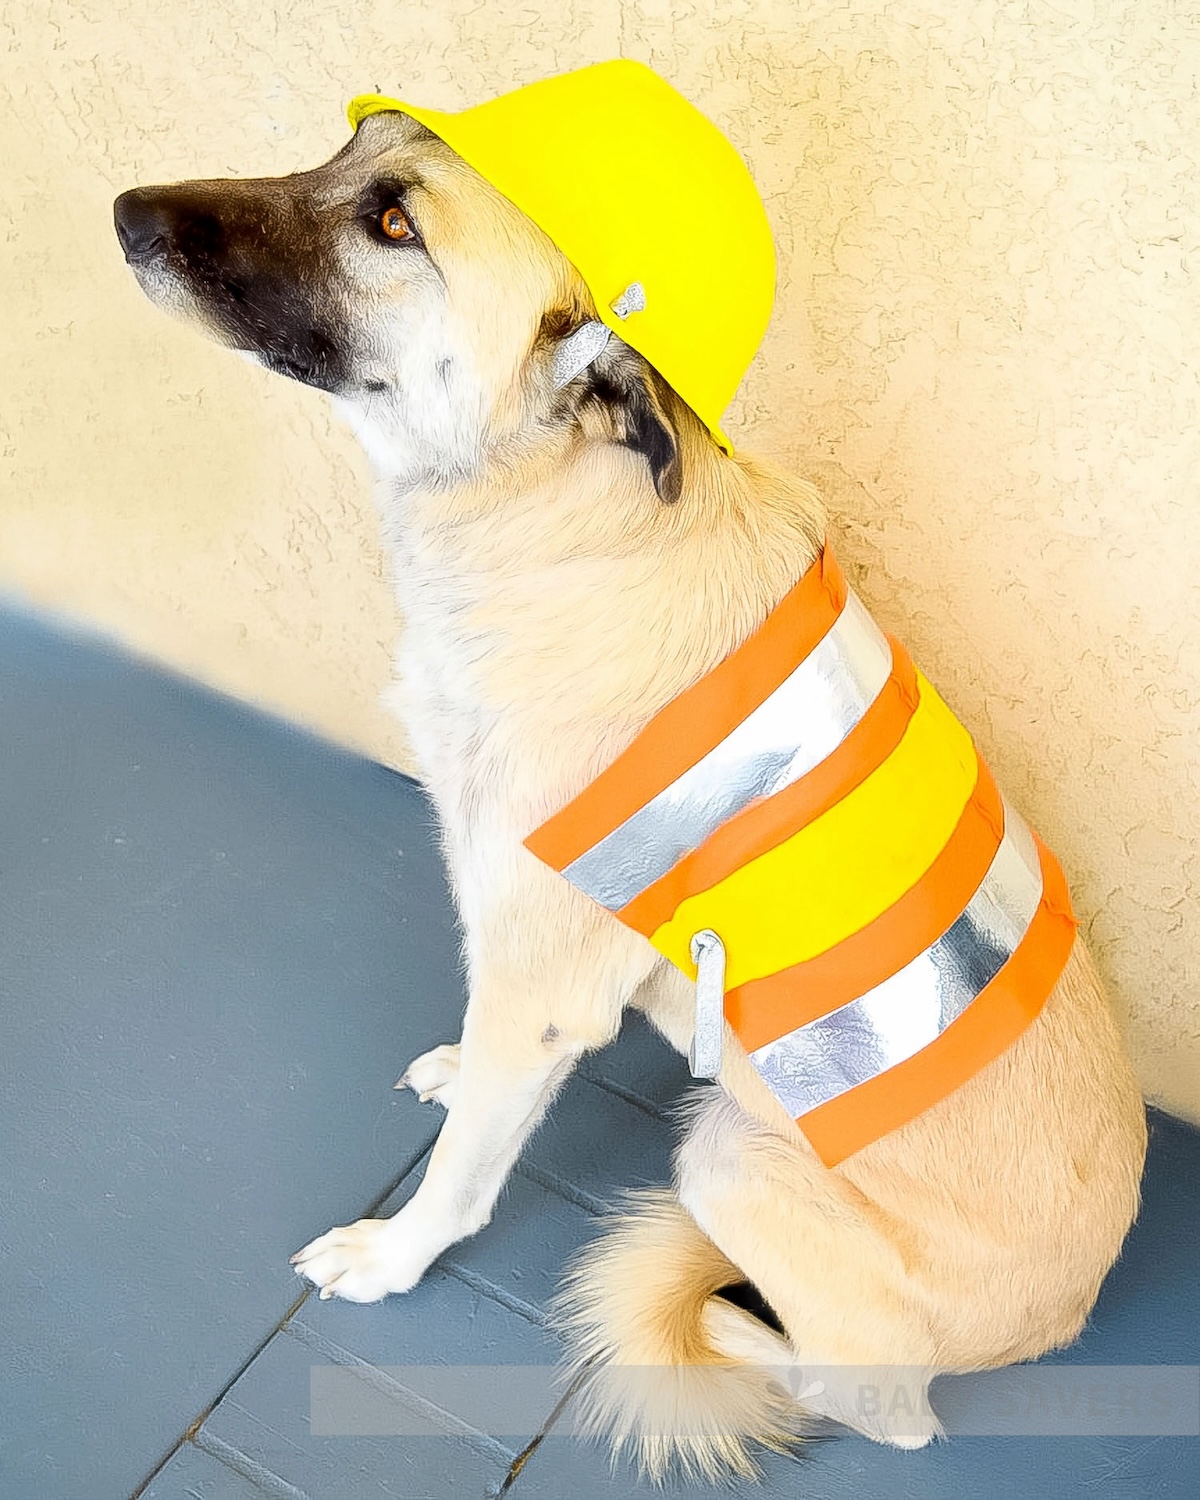 DIY dog construction costume with helmet